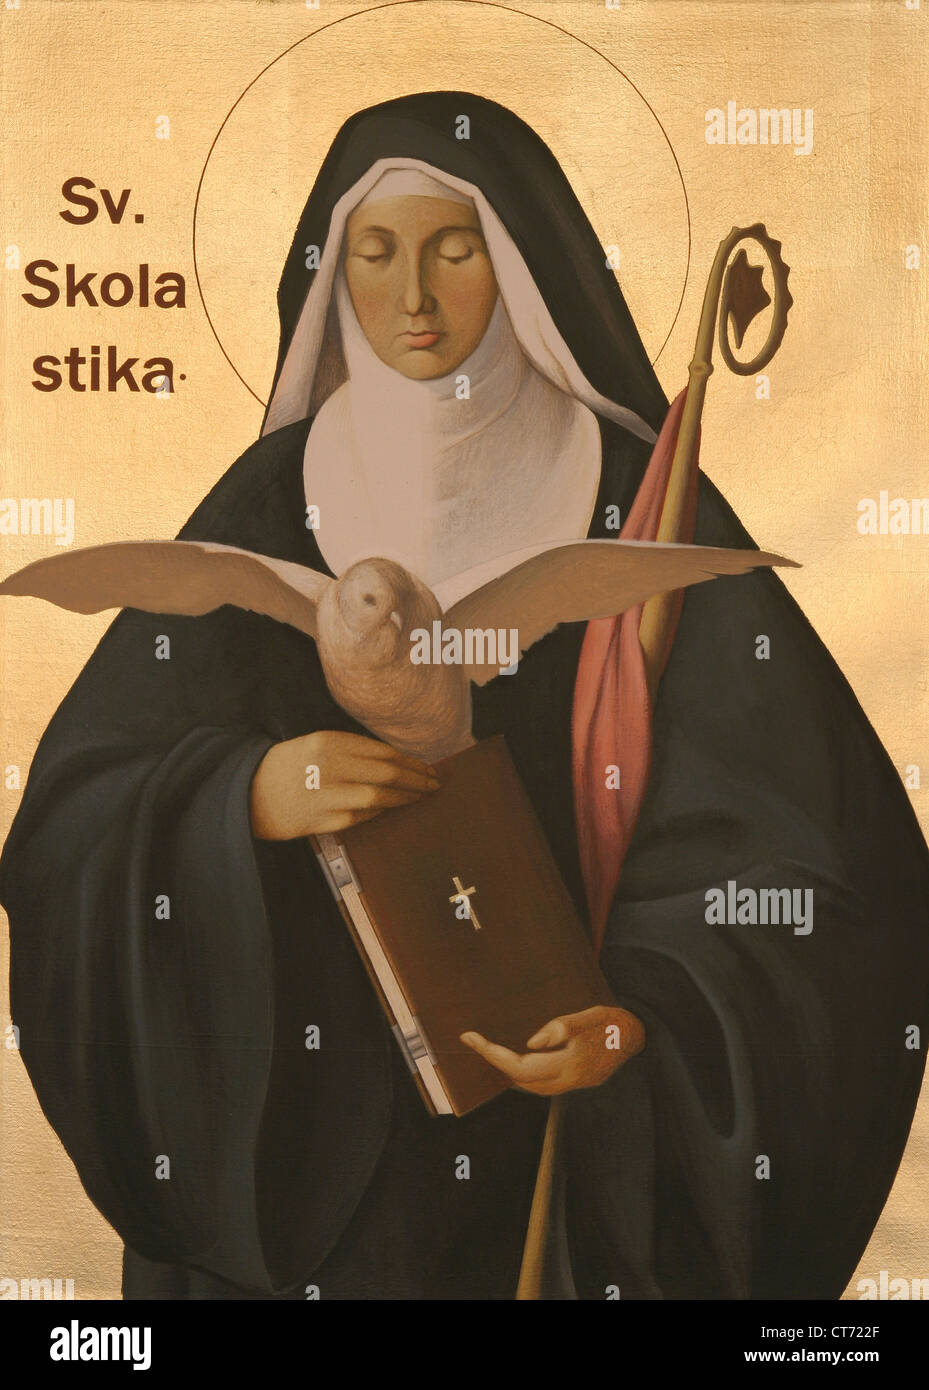 St. Scholastica  Poster for Sale by mfrancescon13